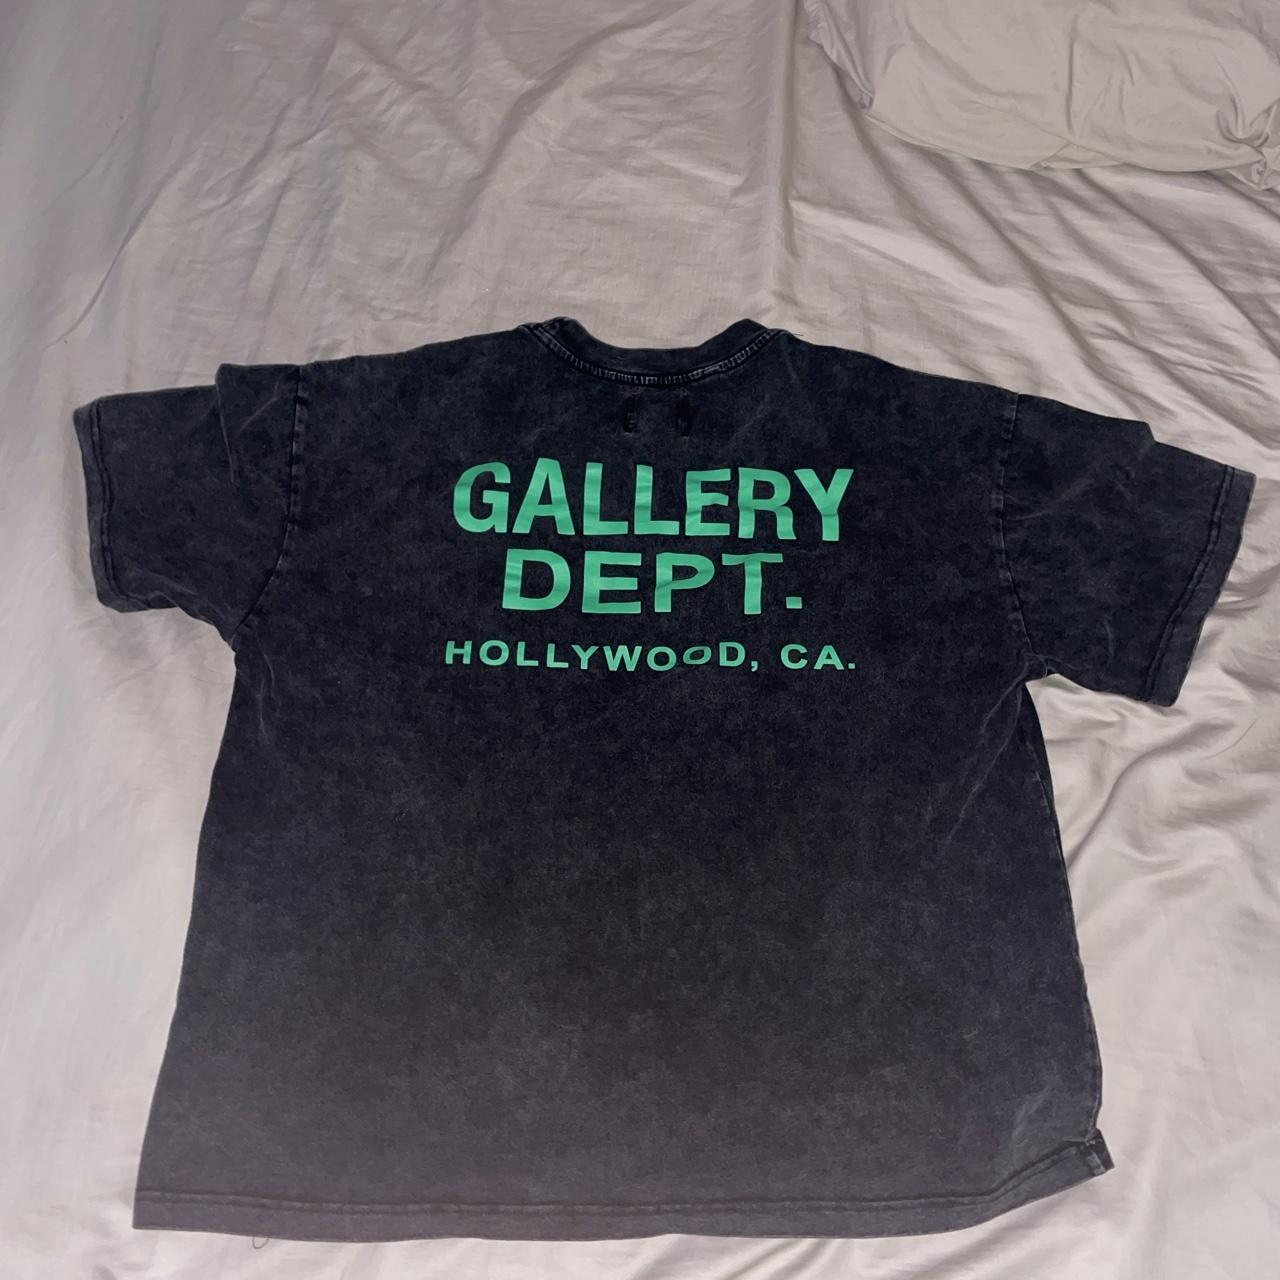 Gallery Dept. Men's Black and Green T-shirt | Depop